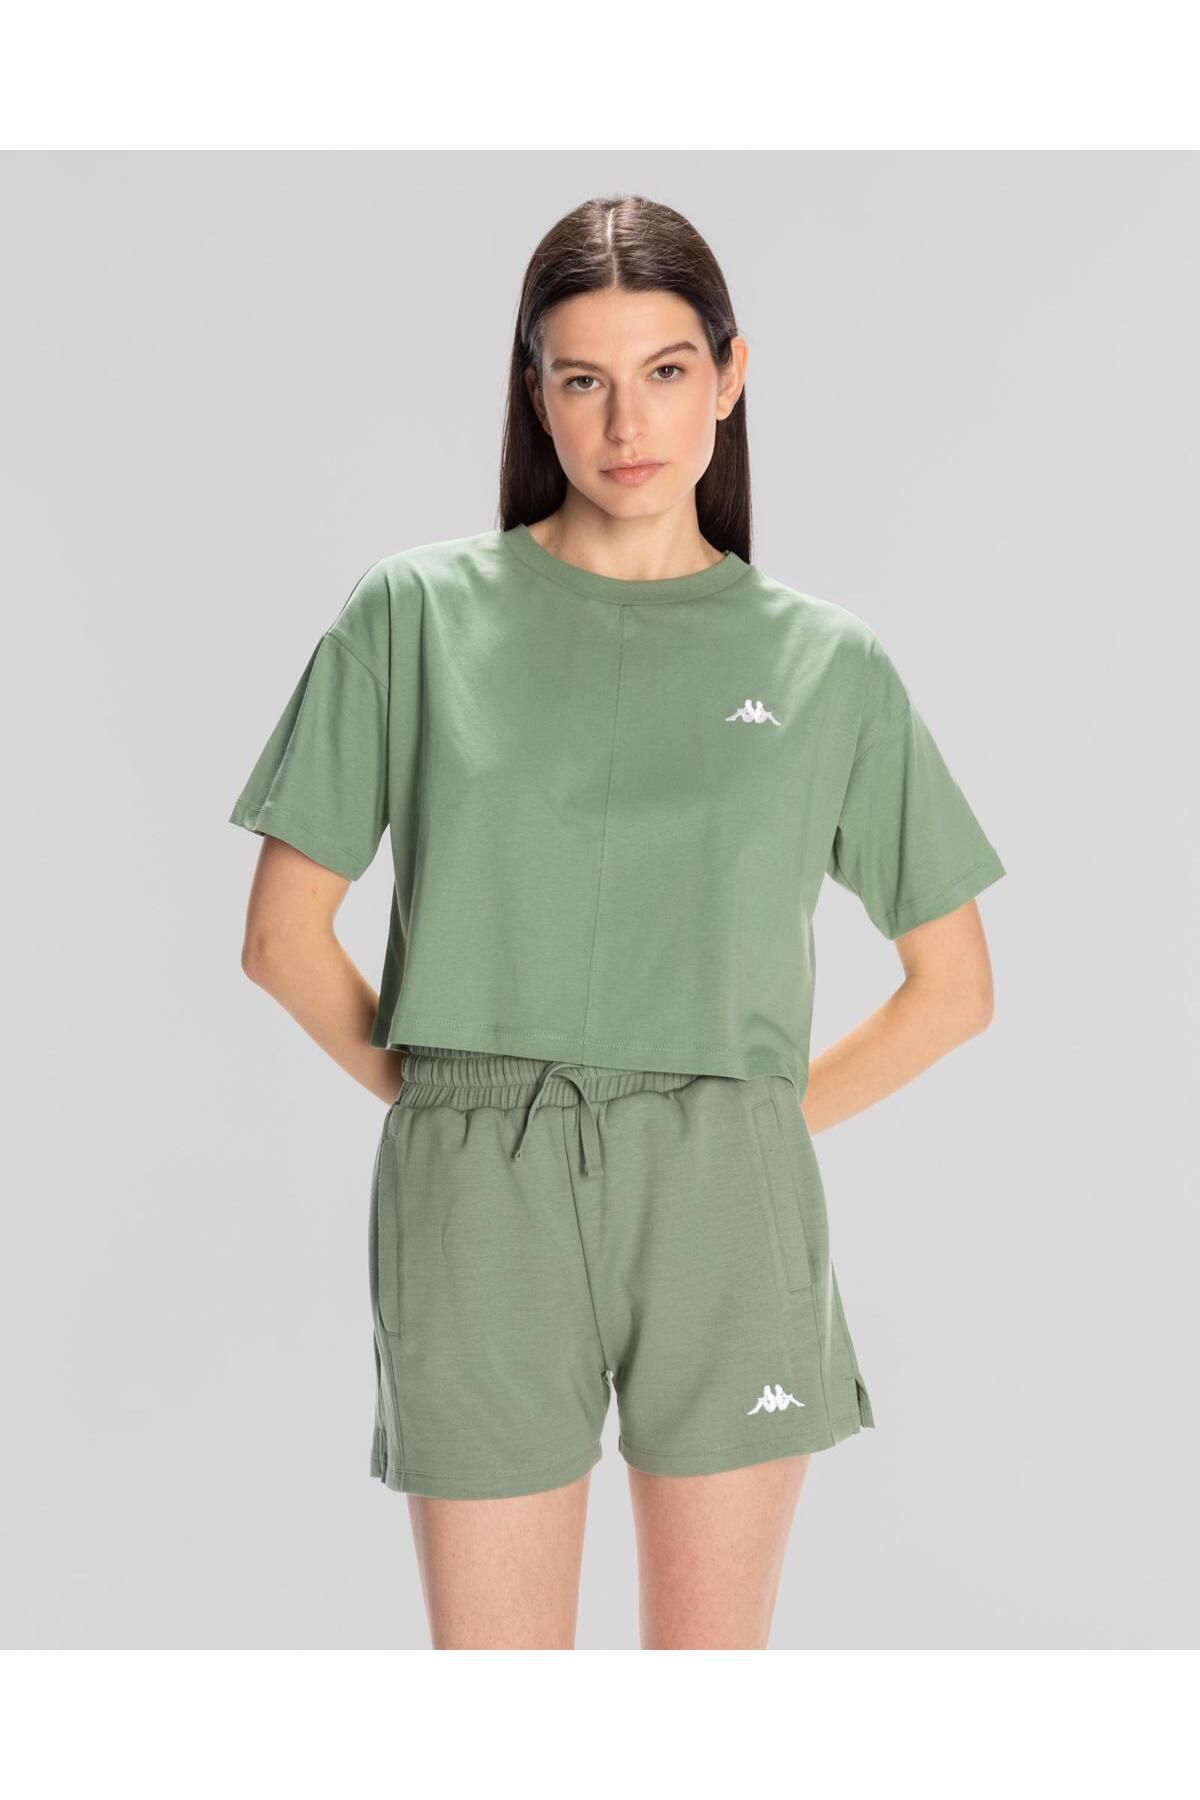 Kappa Authentic Sylia T-shirt Kadın Yeşil Oversize Fit Tişört